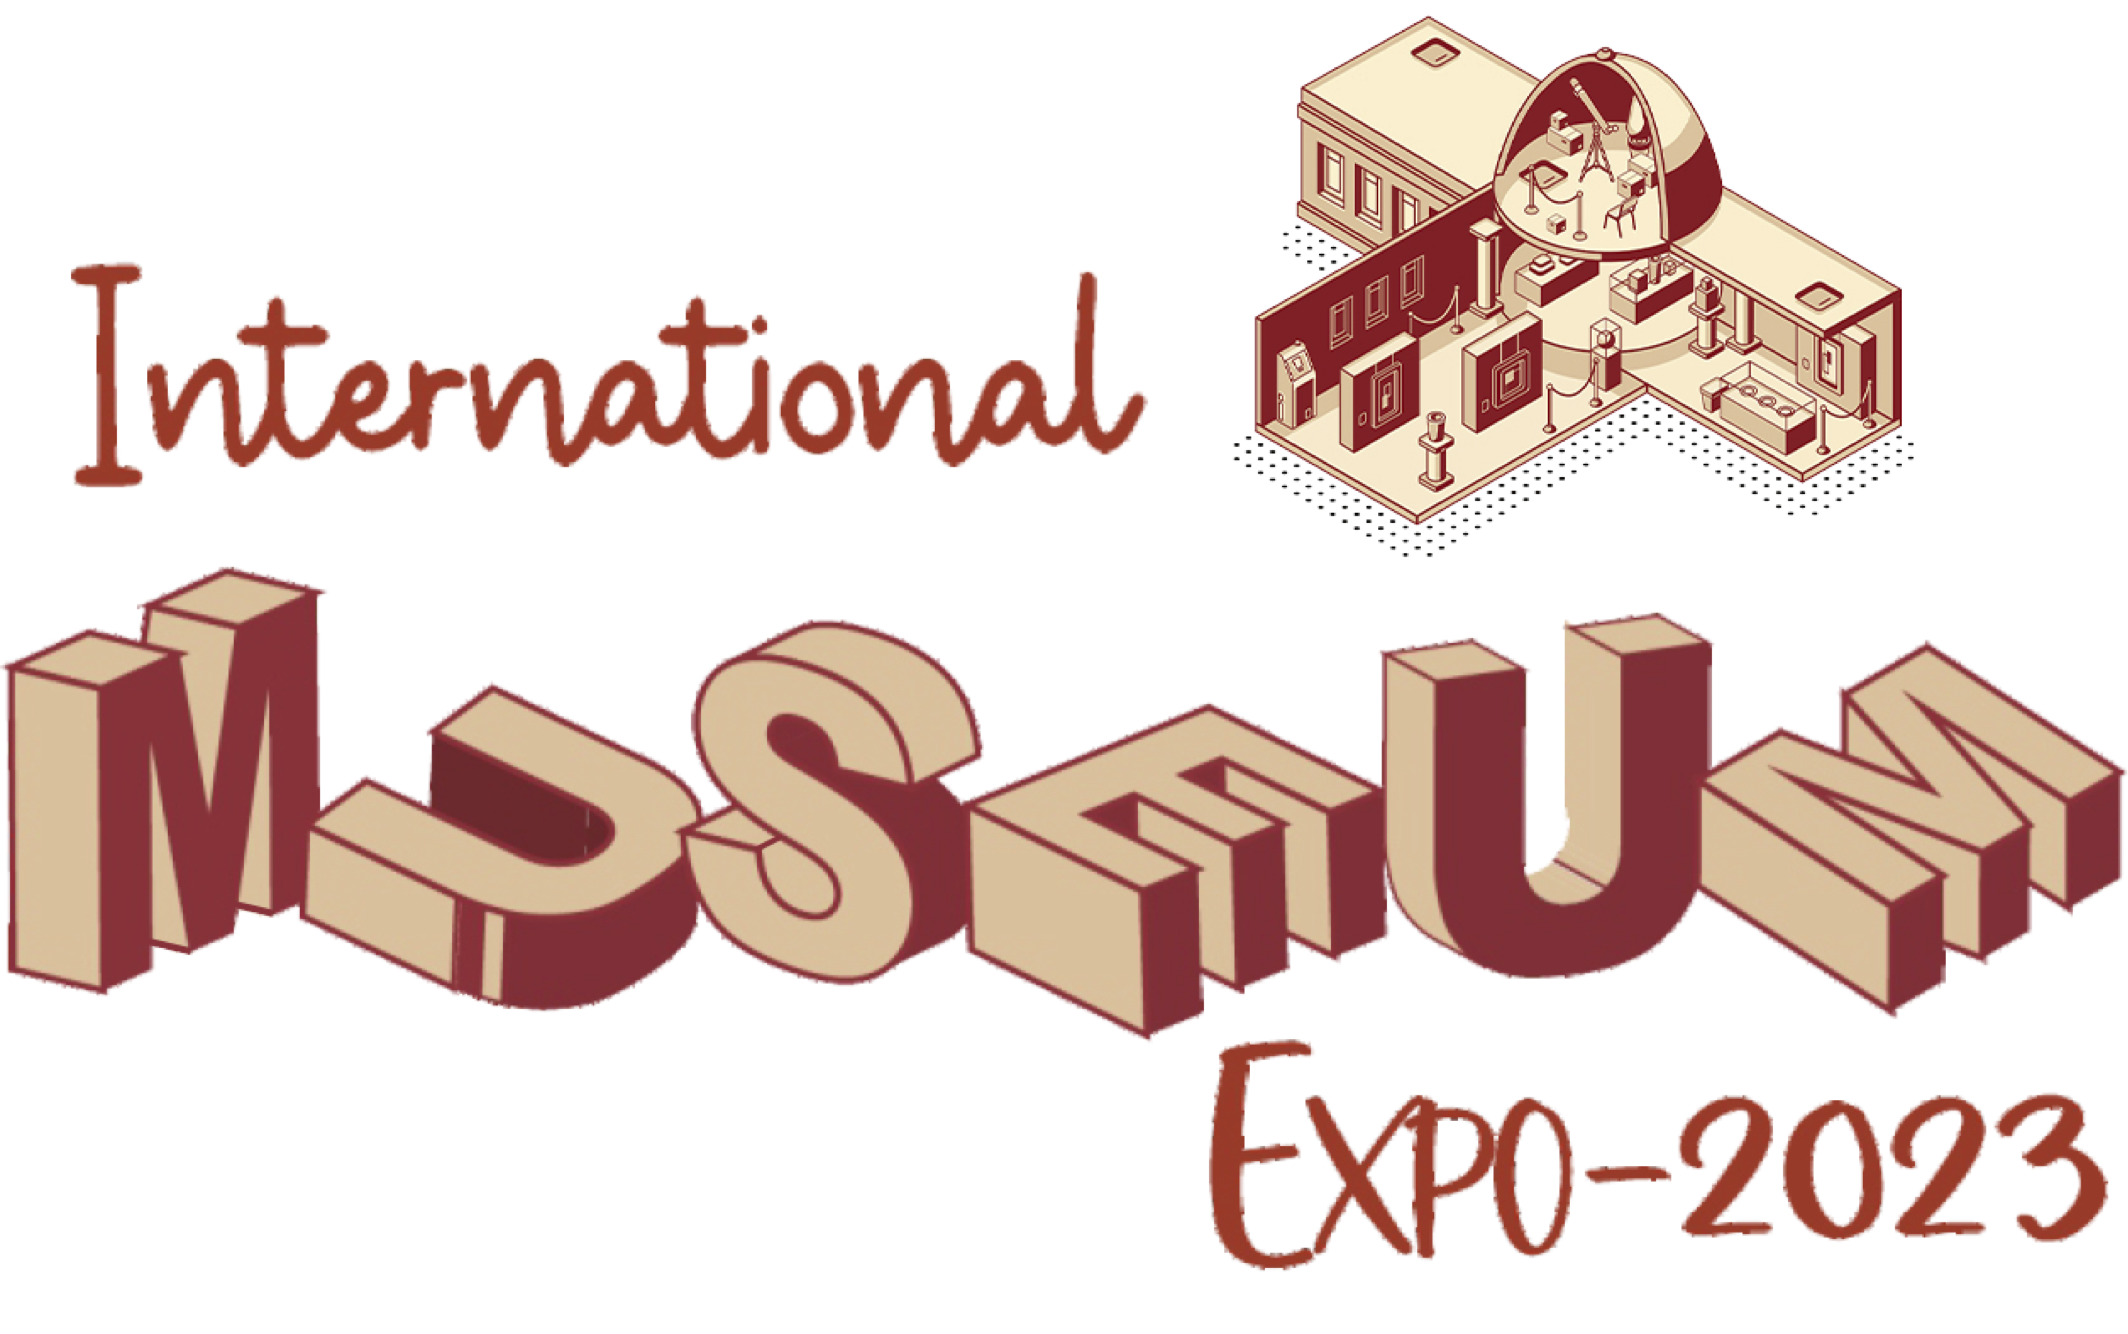 Home International Museum Expo 2023